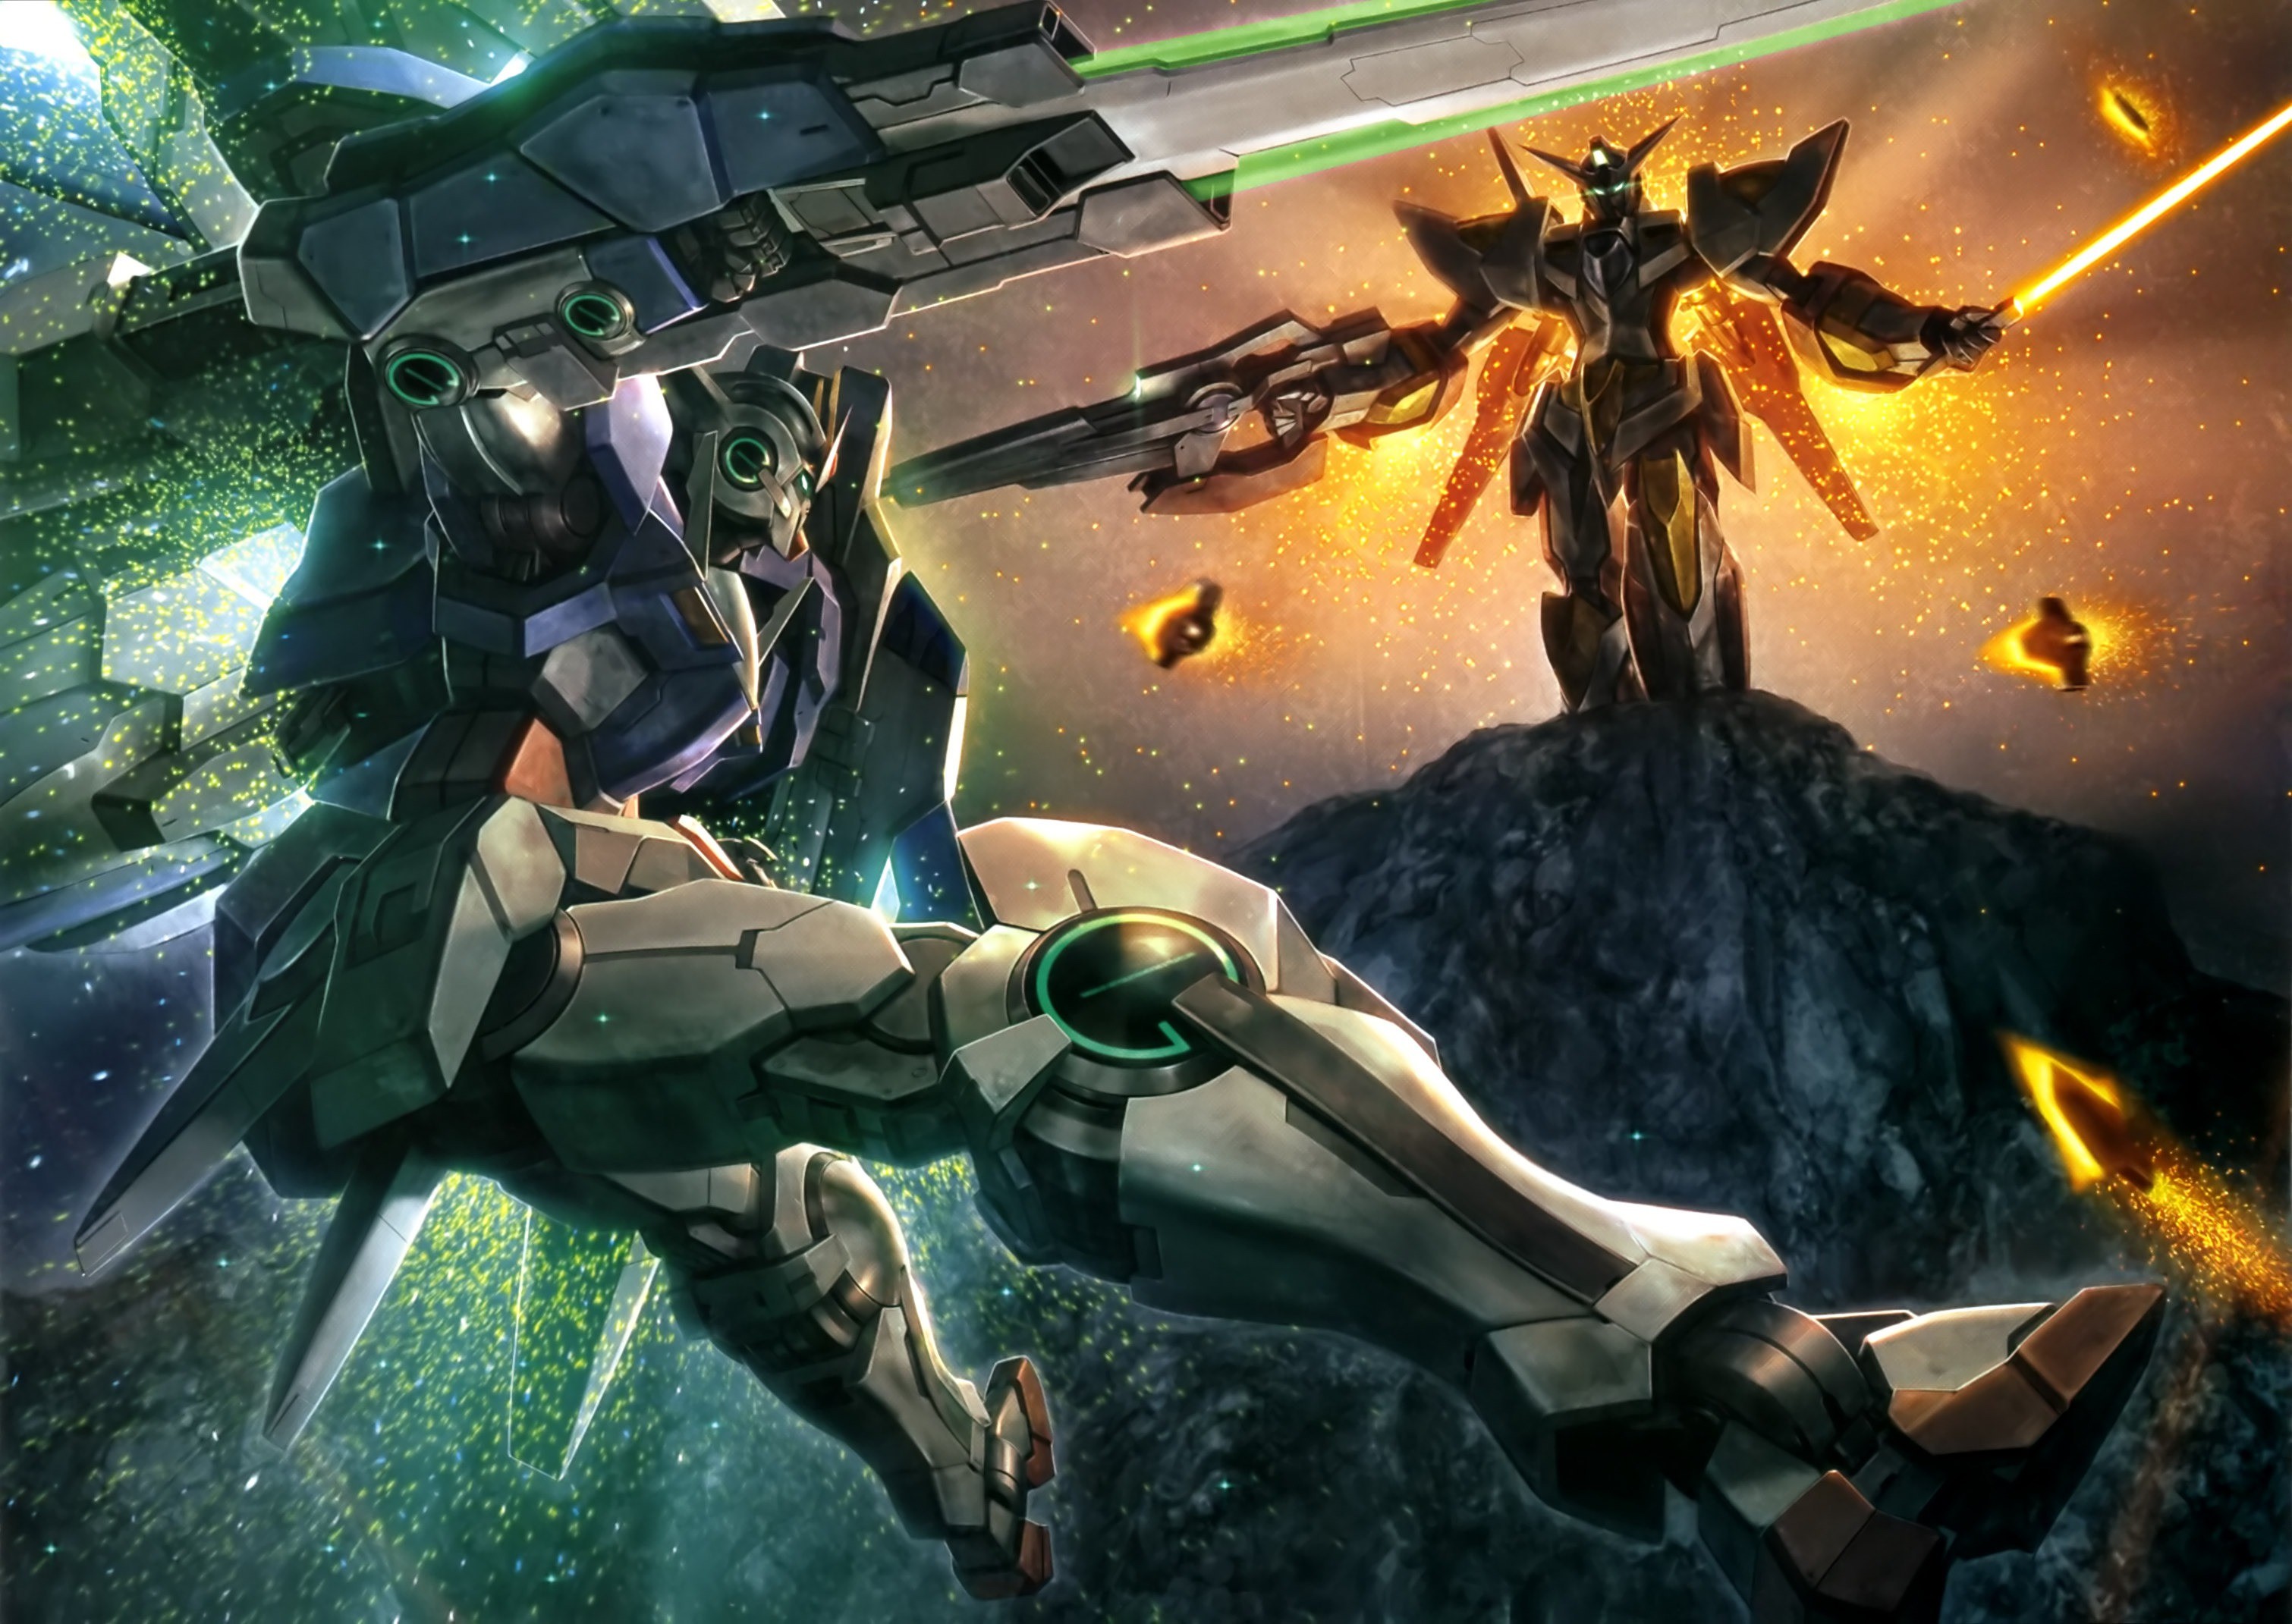 00 Raiser vs Reborns Gundam gundam illustrations Pinterest Gundam and Anime